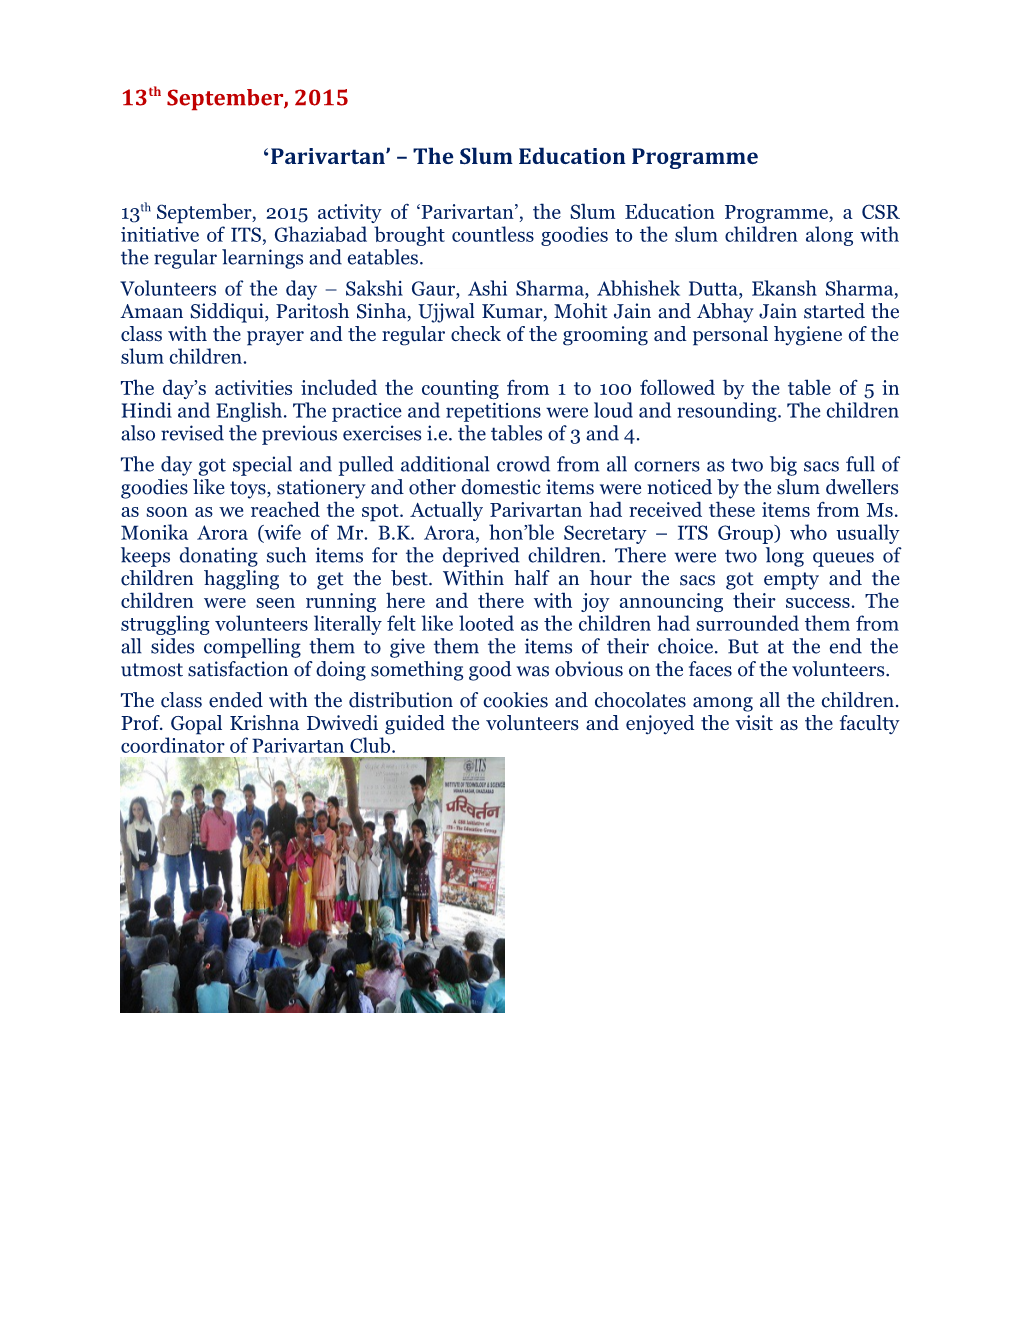 Parivartan the Slum Education Programme